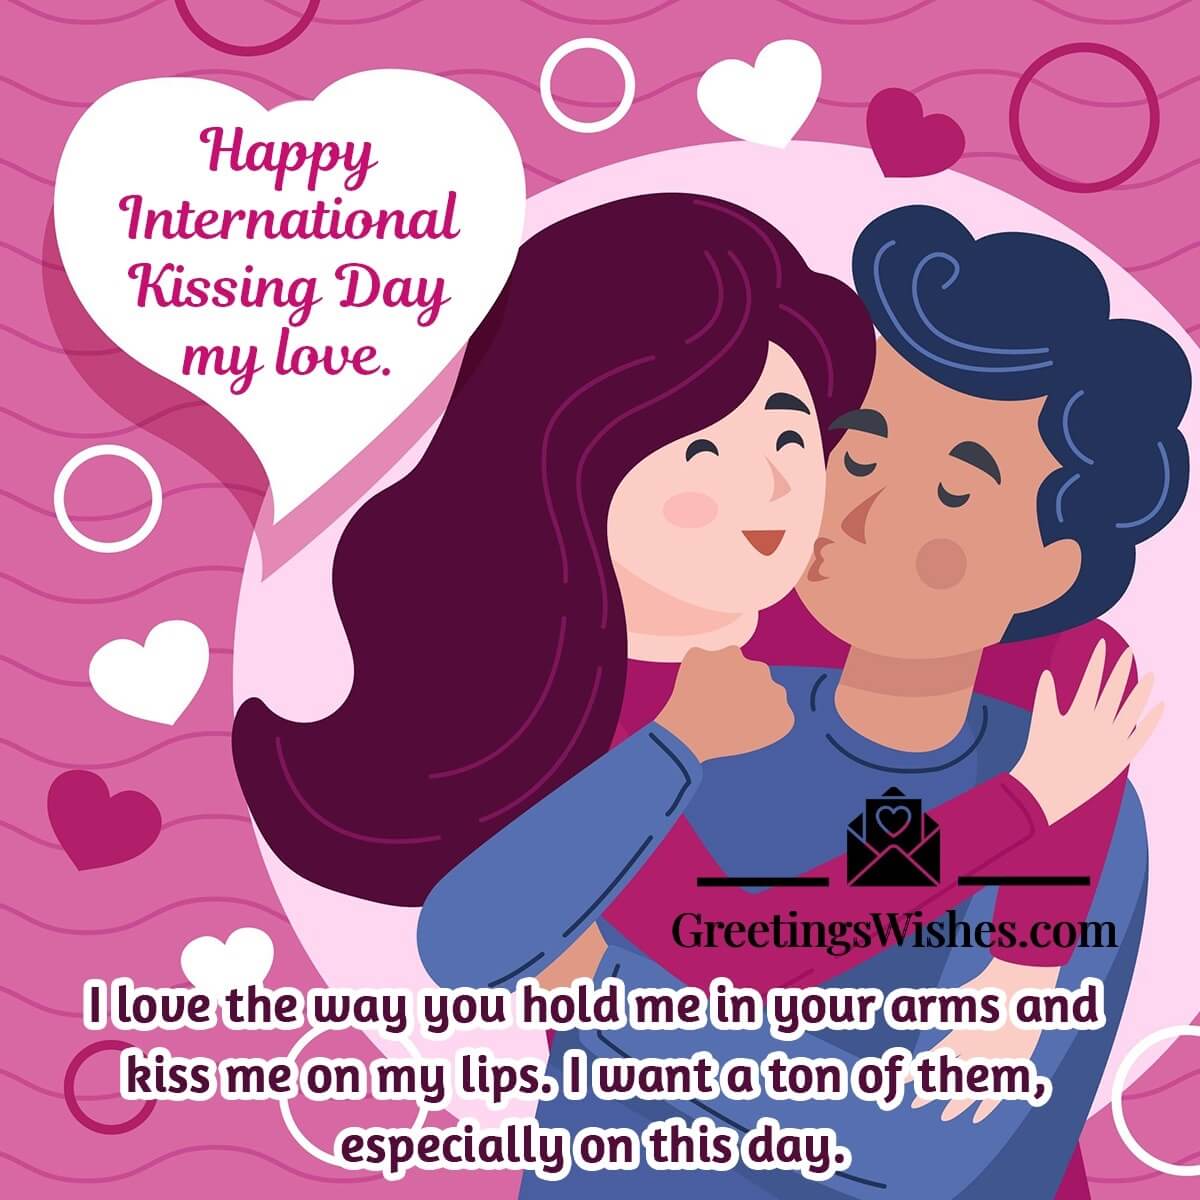 Happy International Kissing Day My Love